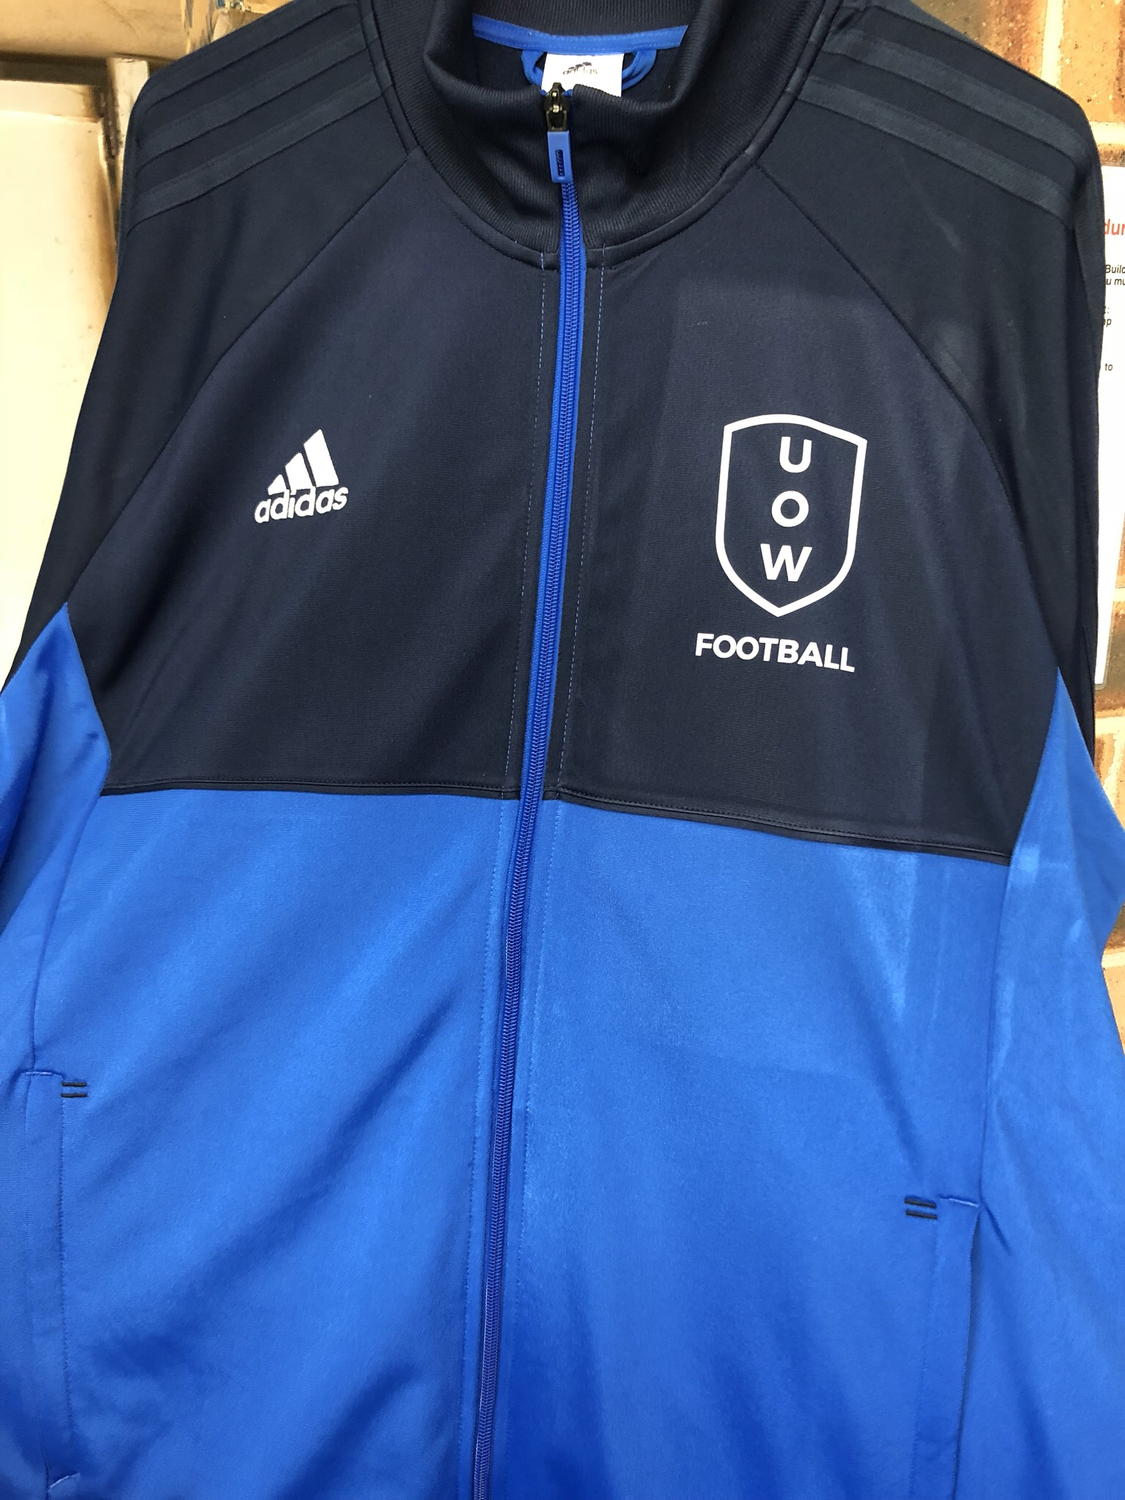 Adidas Tiro UOWFC Club Jacket